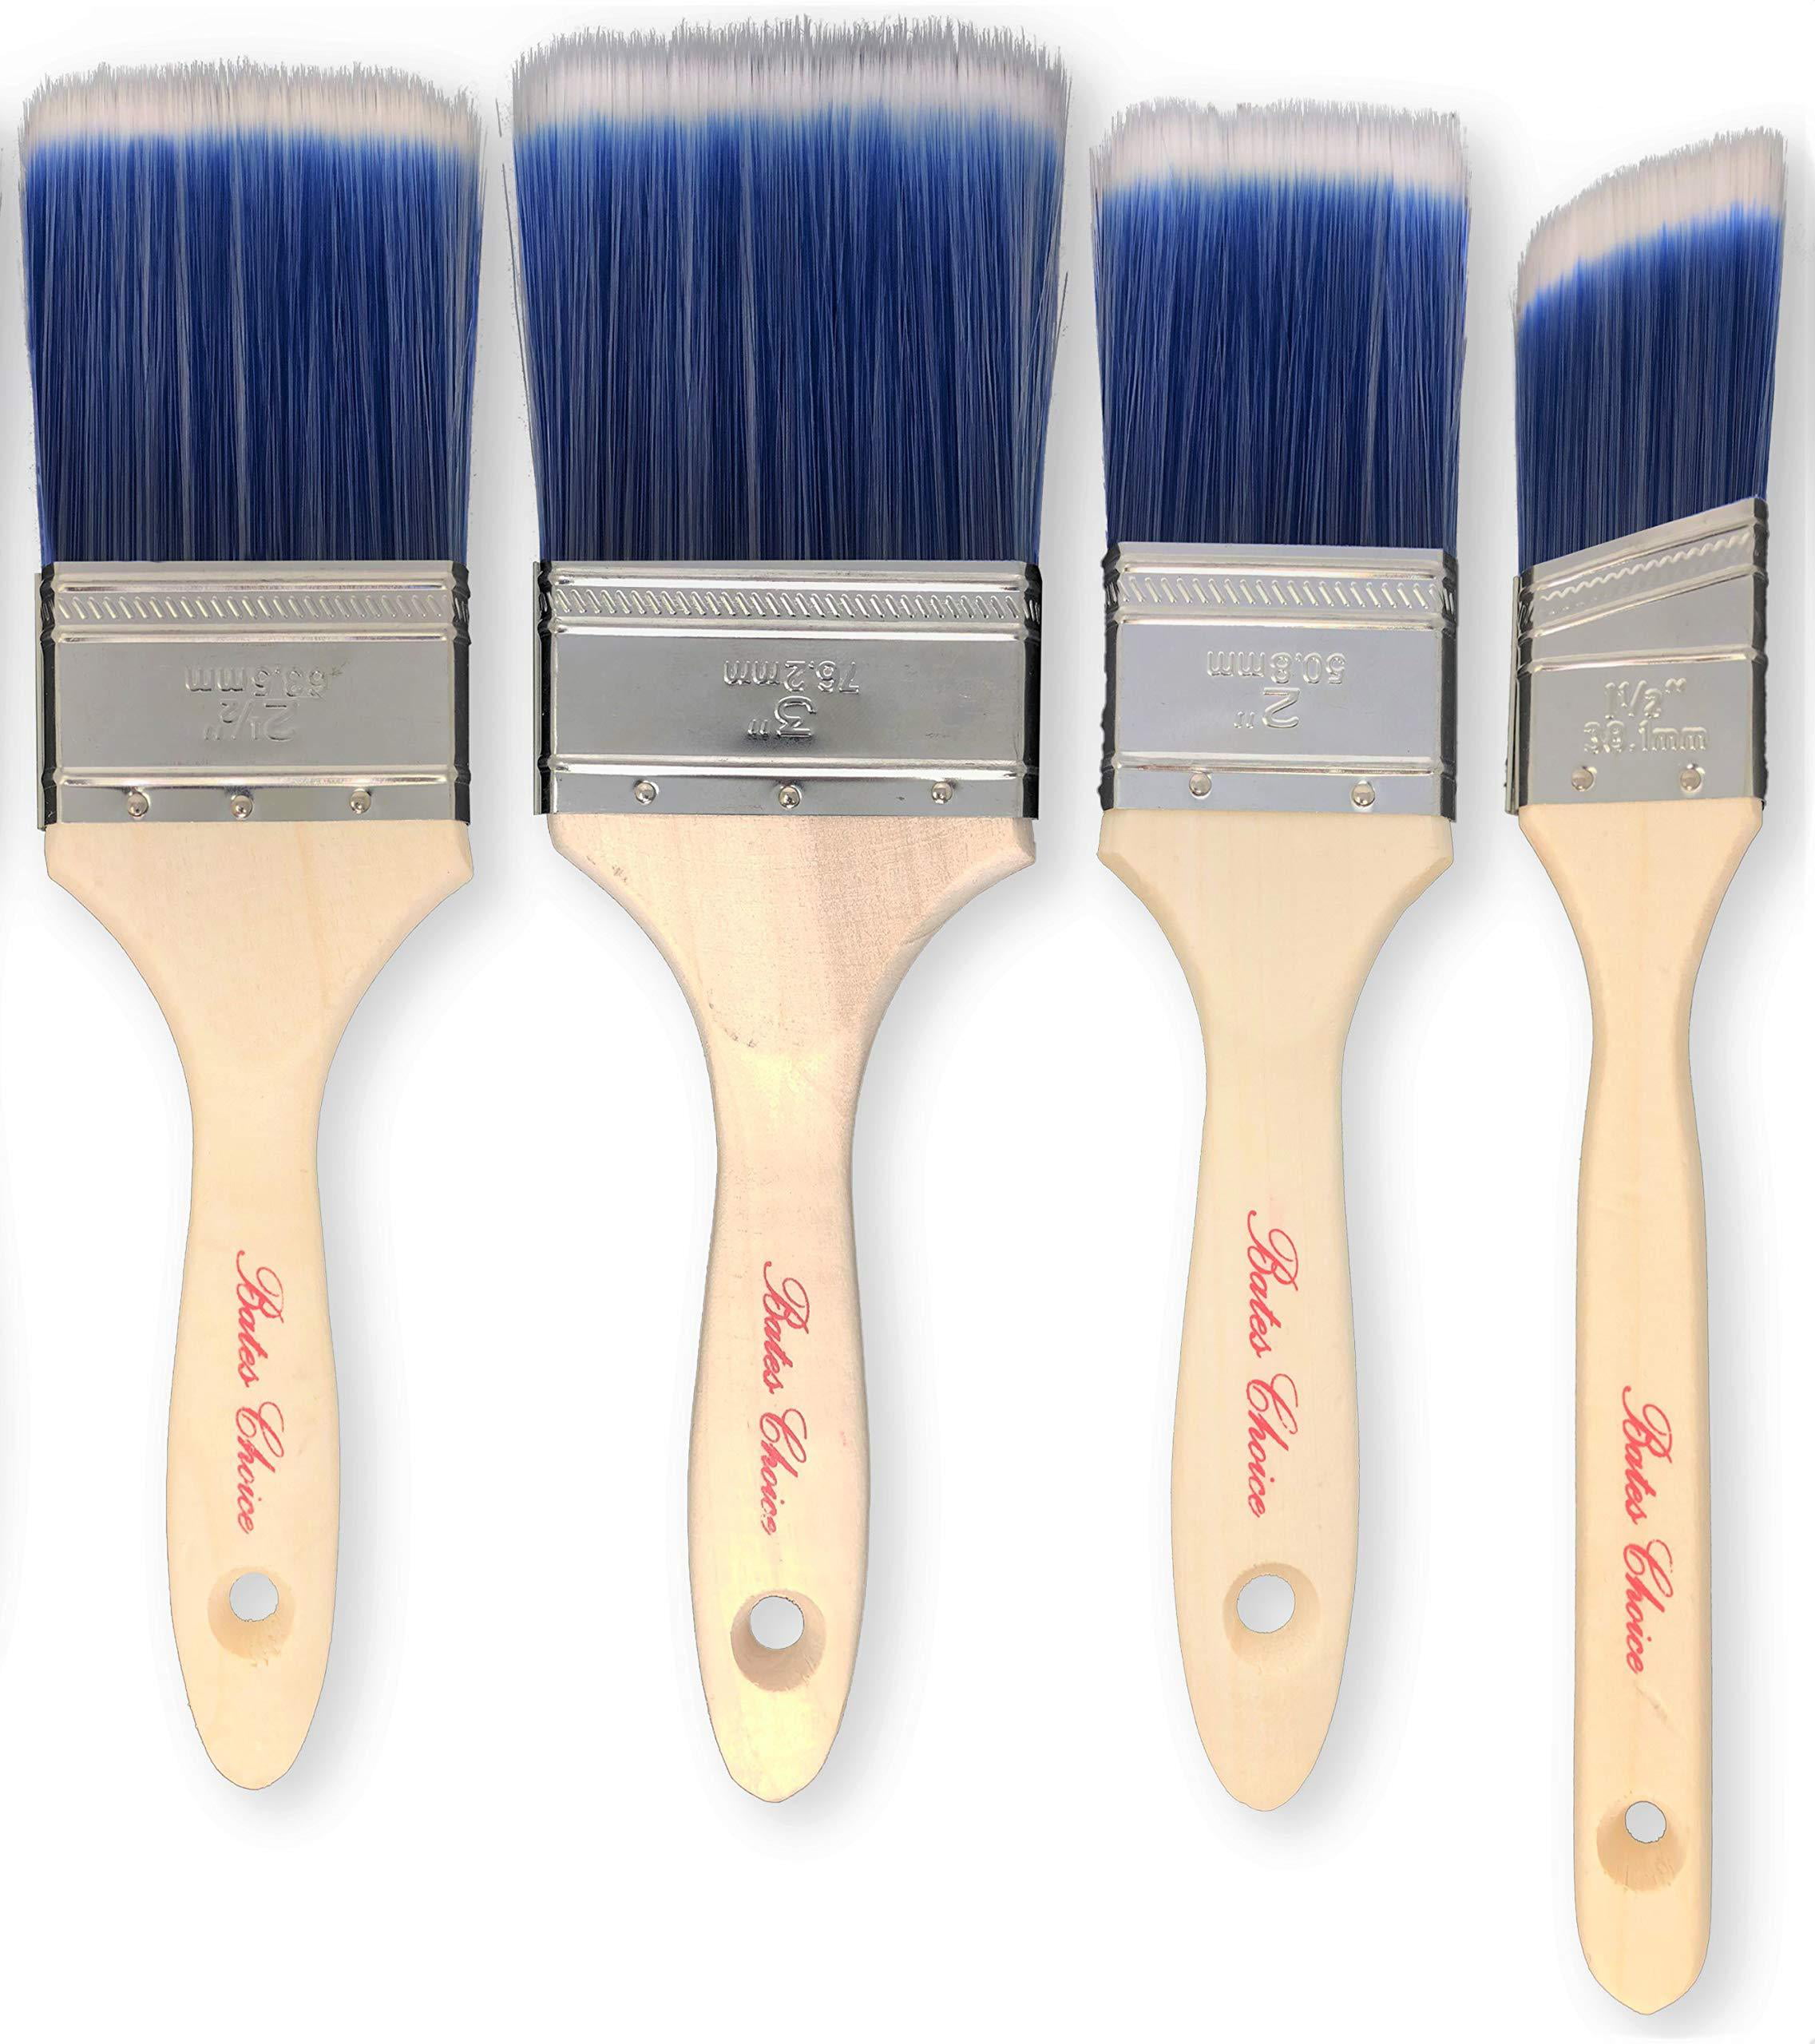 brush manufacturers